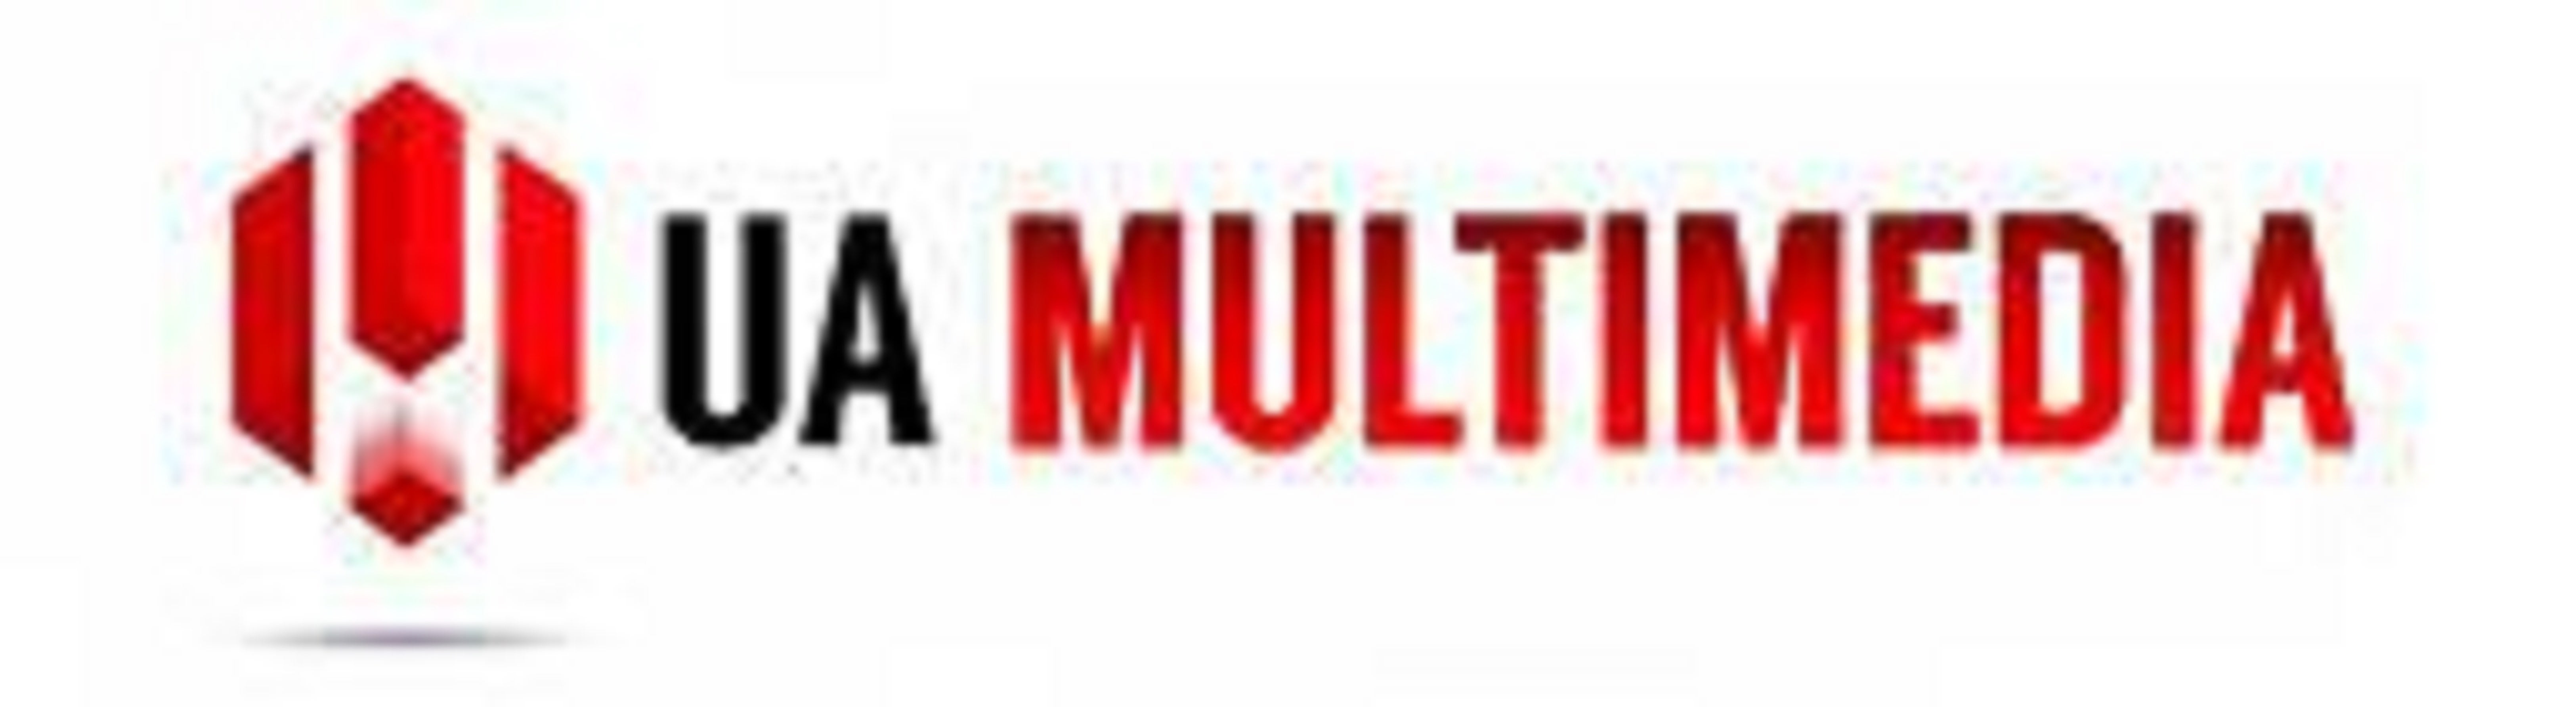 UA Multimedia, Inc., (OTCMKTS: UAMM) Major Move as Crypto ...